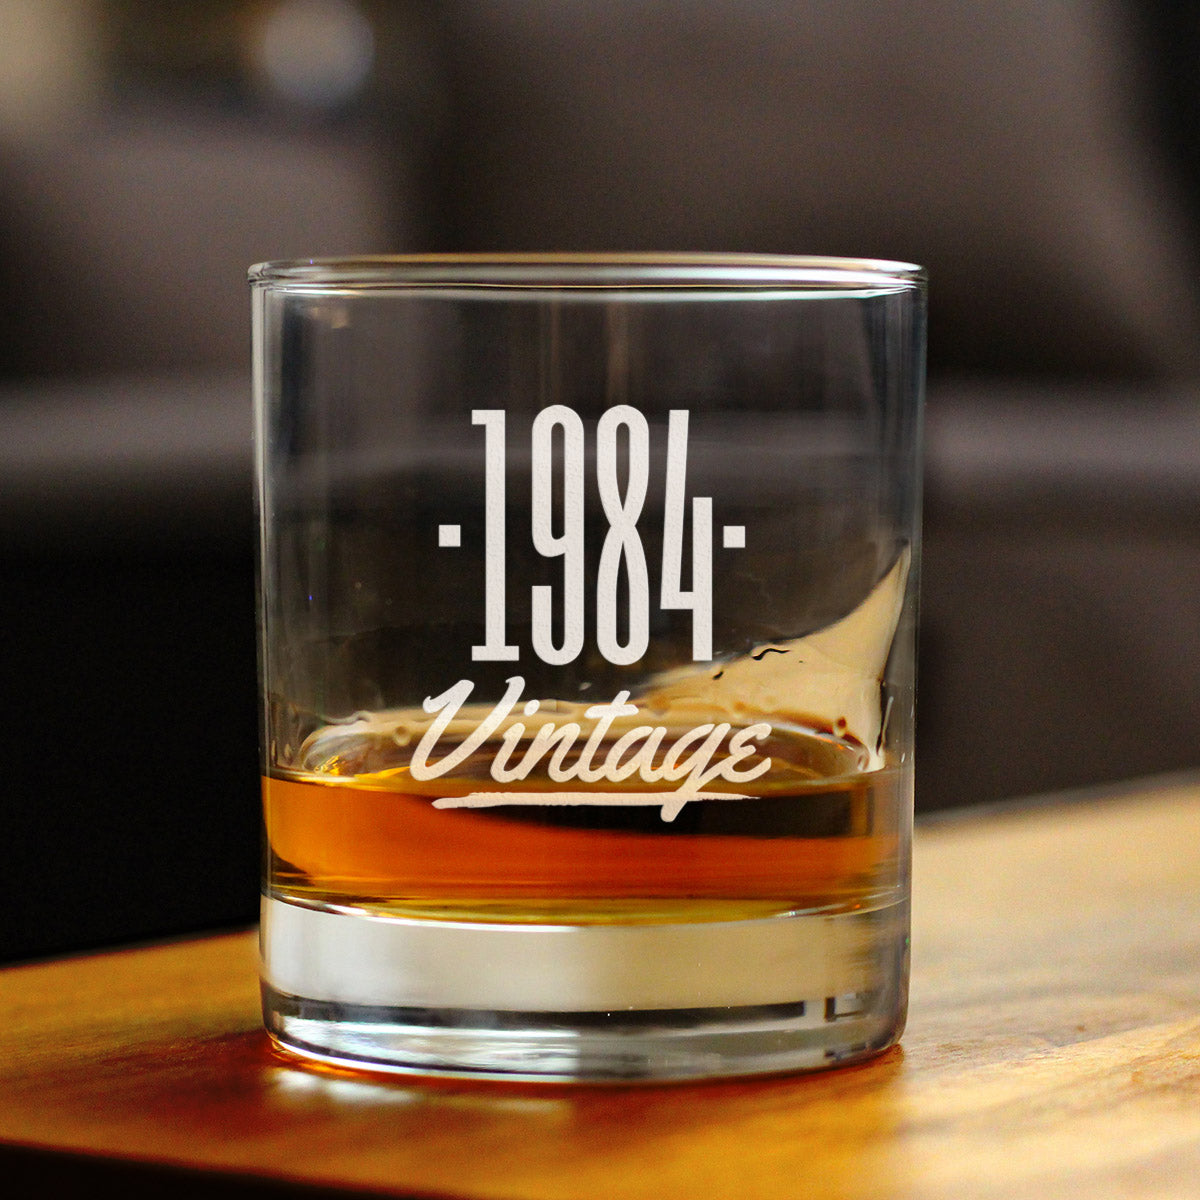 Vintage 1984 - Fun 40th Birthday Whiskey Rocks Glass Gifts for Men &amp; Women Turning 40 - Retro Whisky Drinking Tumbler